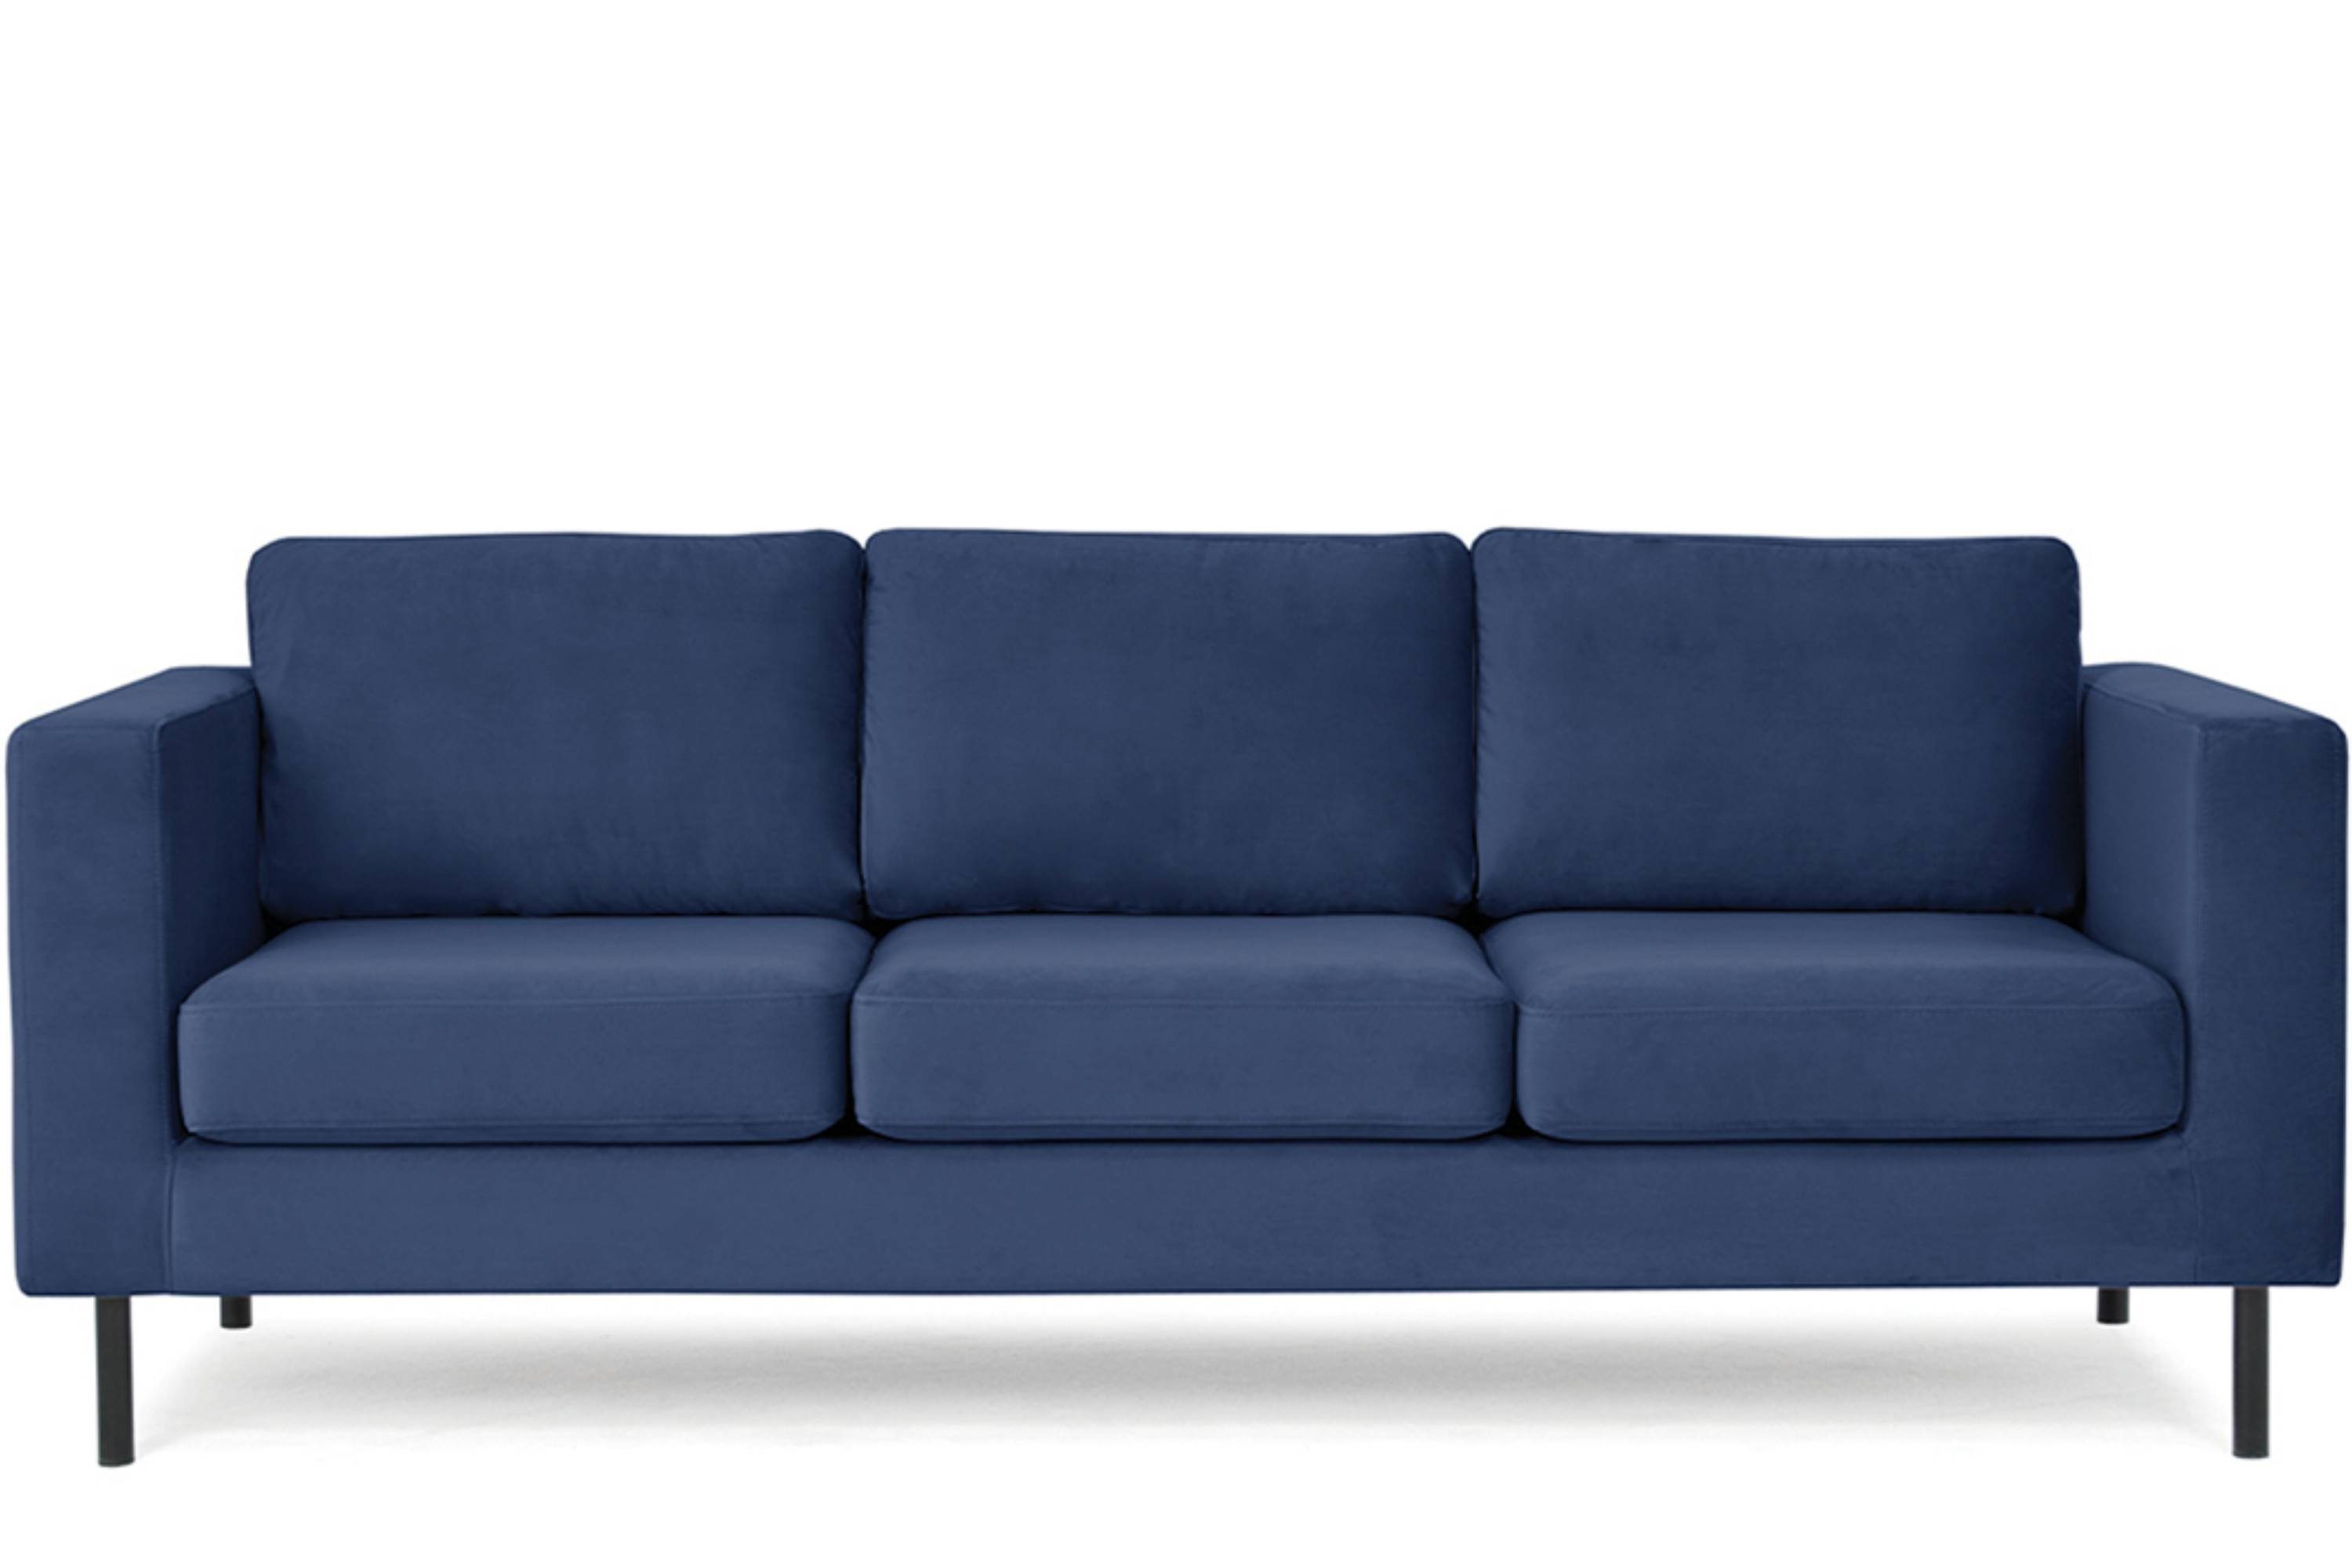 marineblau Konsimo Sofa marineblau hohe 3 Personen, 3-Sitzer marineblau Design | TOZZI Beine, universelles |